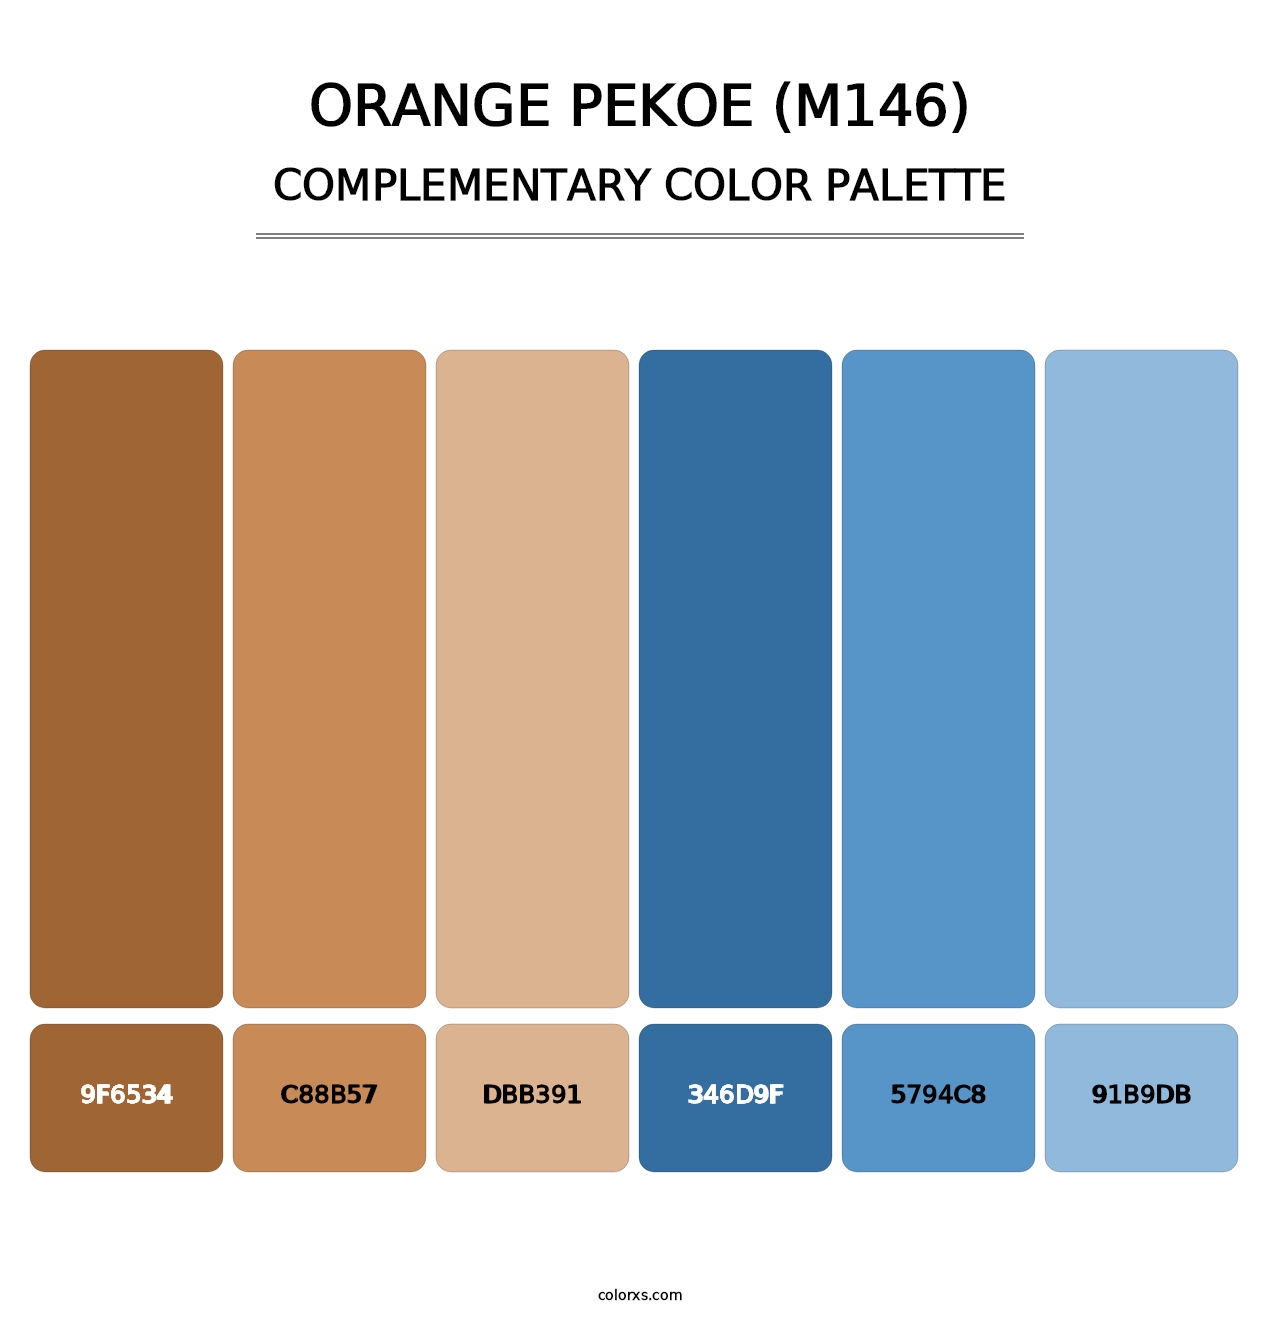 Orange Pekoe (M146) - Complementary Color Palette